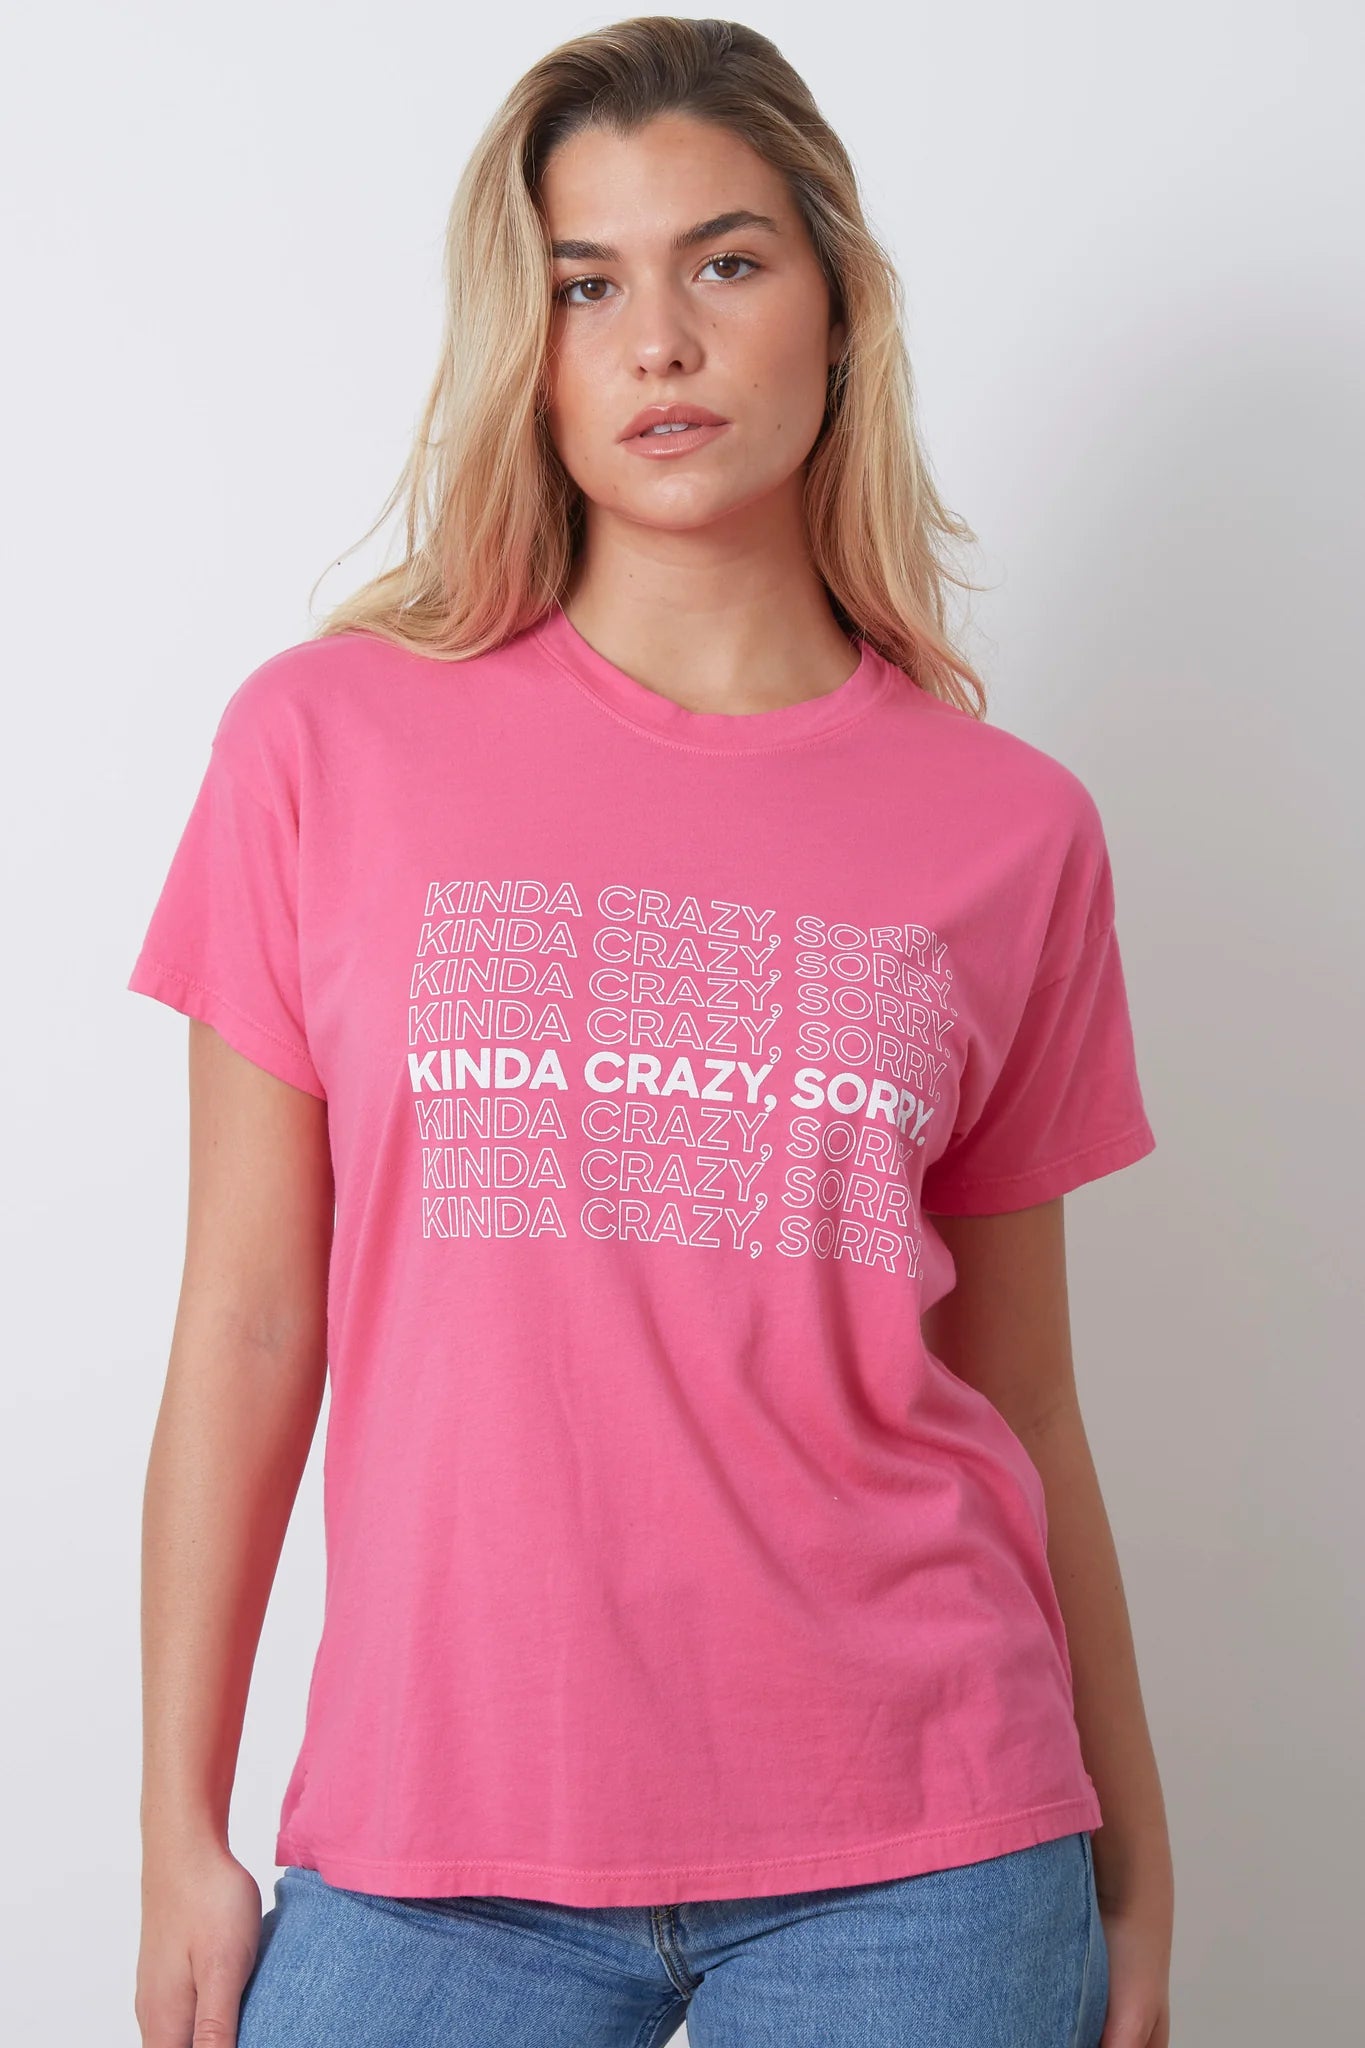 Kinda Crazy, Sorry - Brice T-shirt